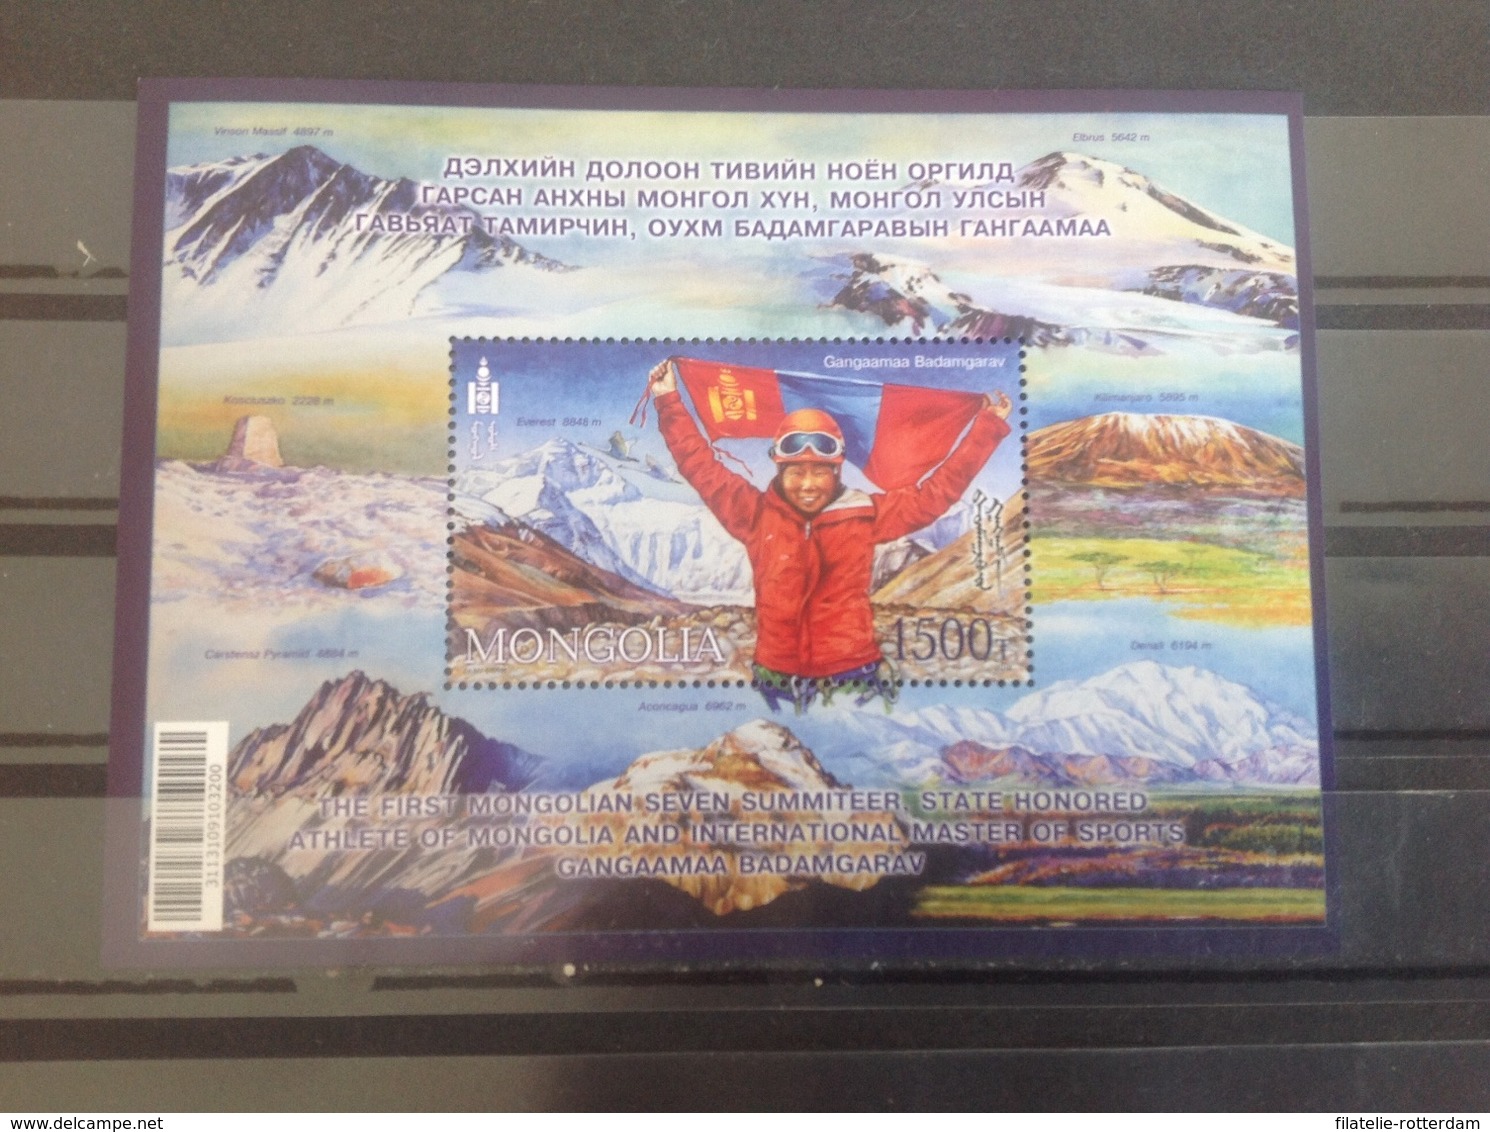 Mongolië / Mongolia - Postfris / MNH - Sheet First Mongolian 7 Summiteer 2018 - Mongolia